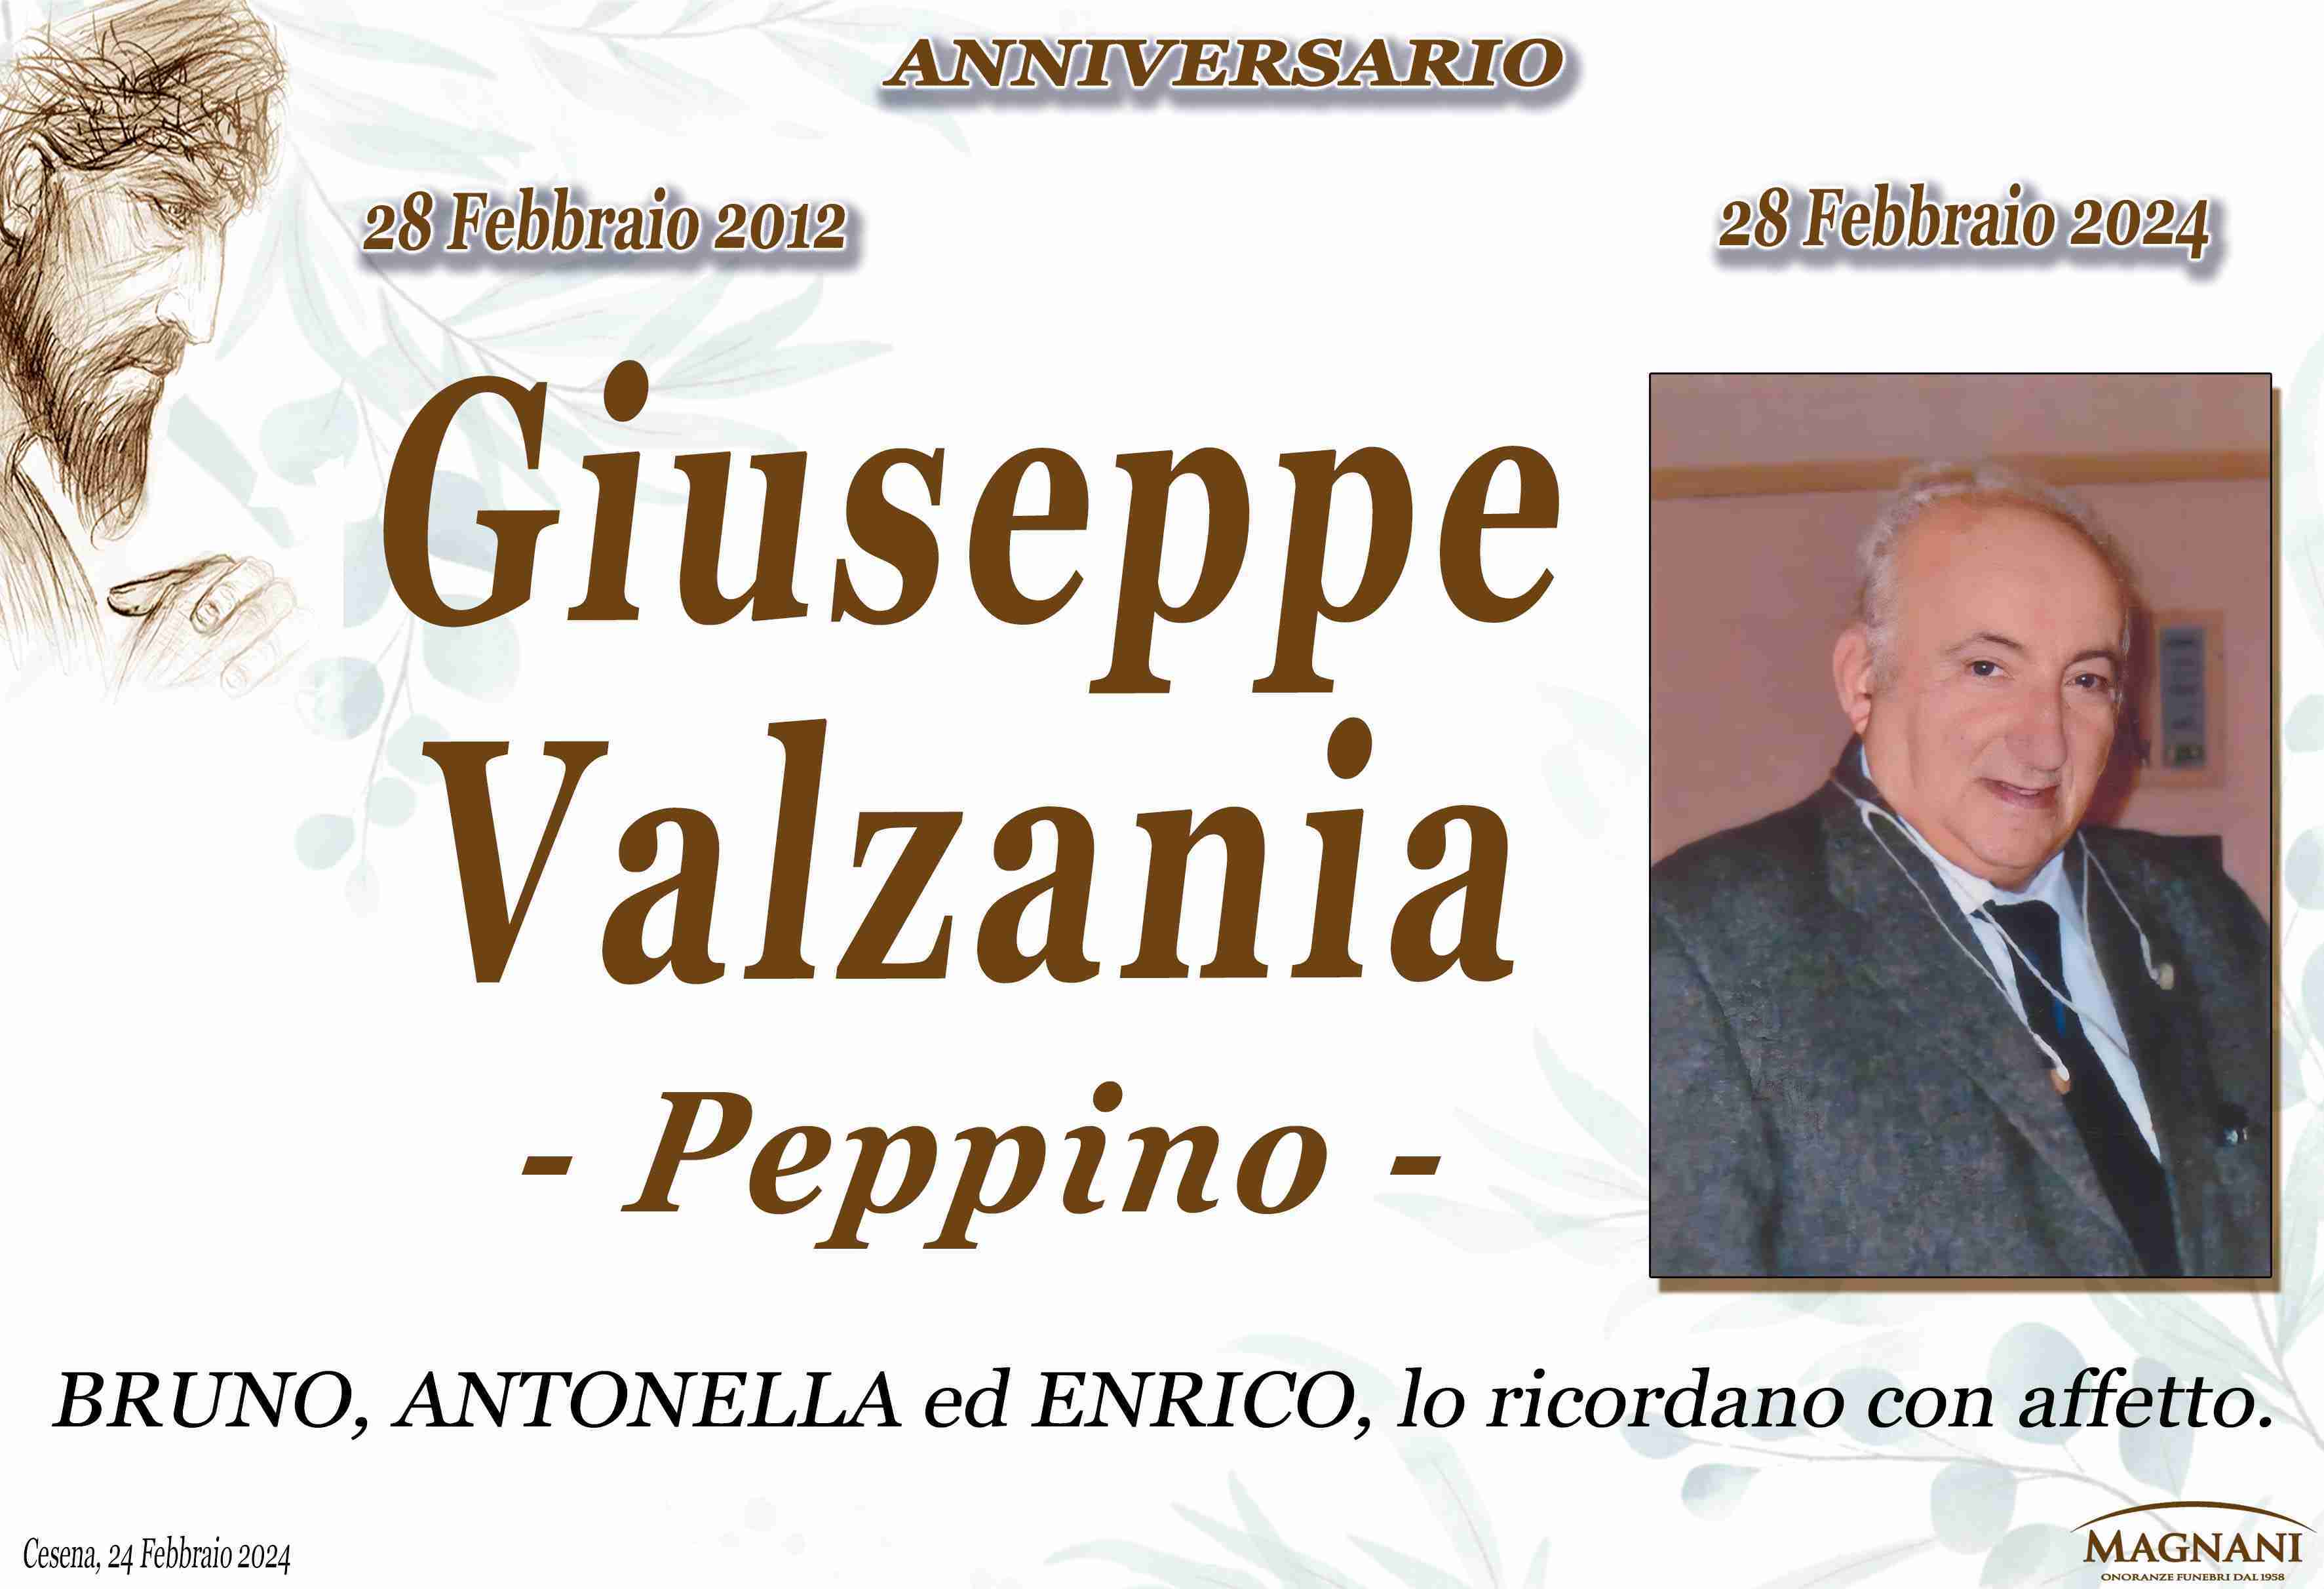 Giuseppe Valzania